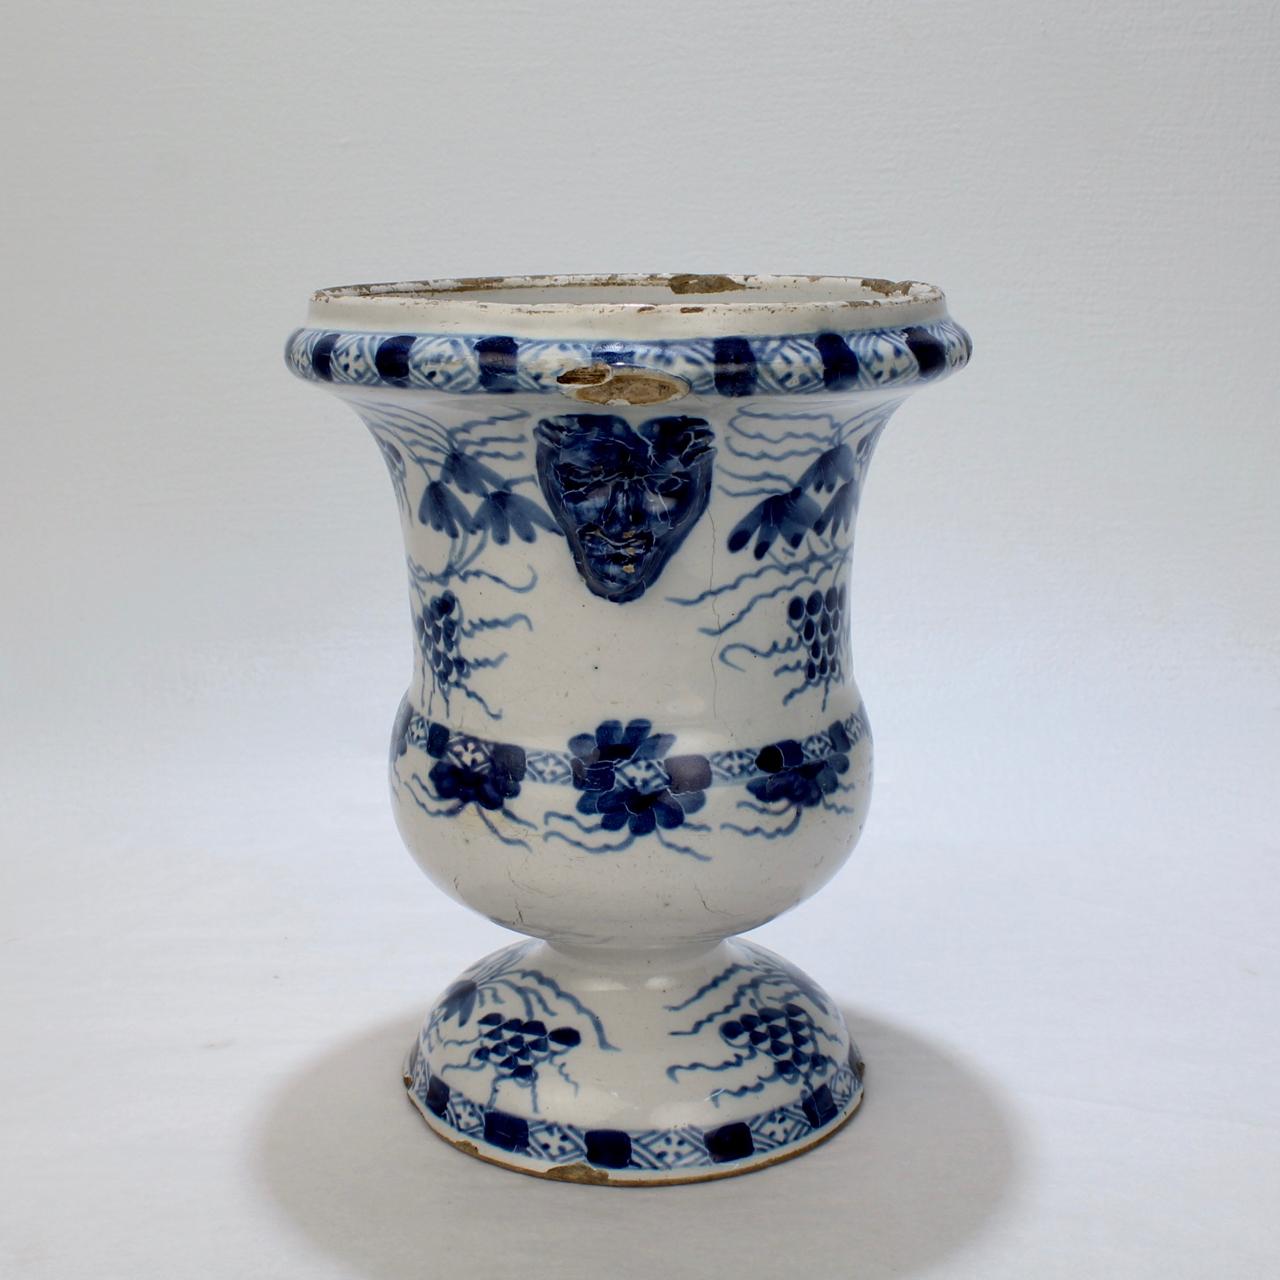 British Antique 18th Century English Bristol Delftware Pottery Urn or Vase